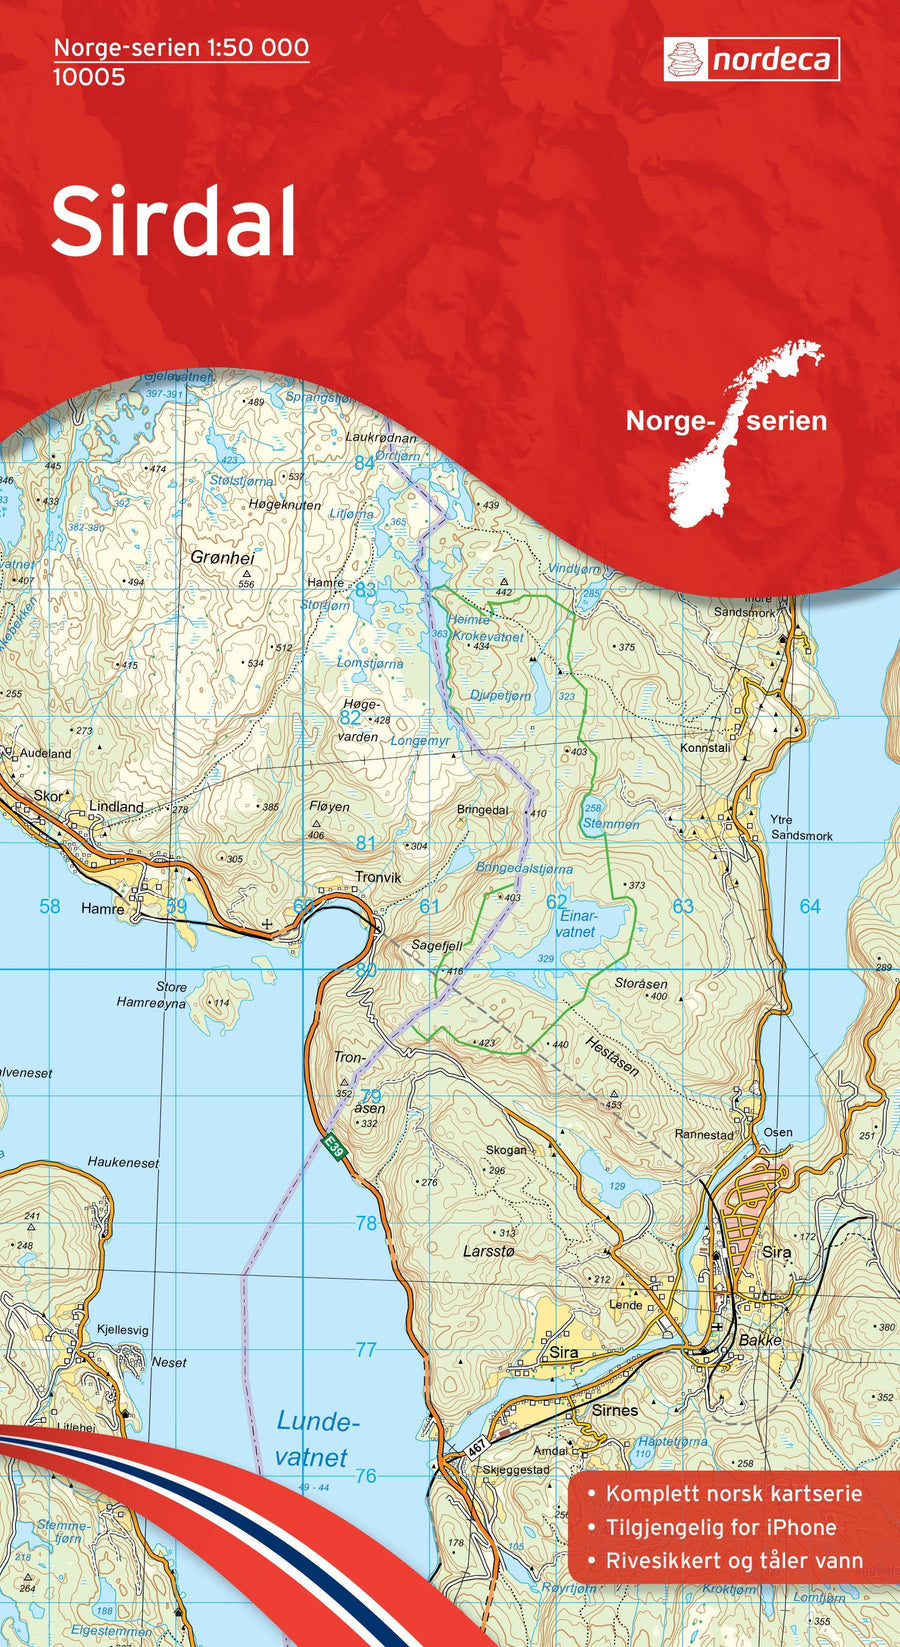 Carte de randonnée n° 10005 - Sirdal (Norvège) | Nordeca - Norge-serien carte pliée Nordeca 